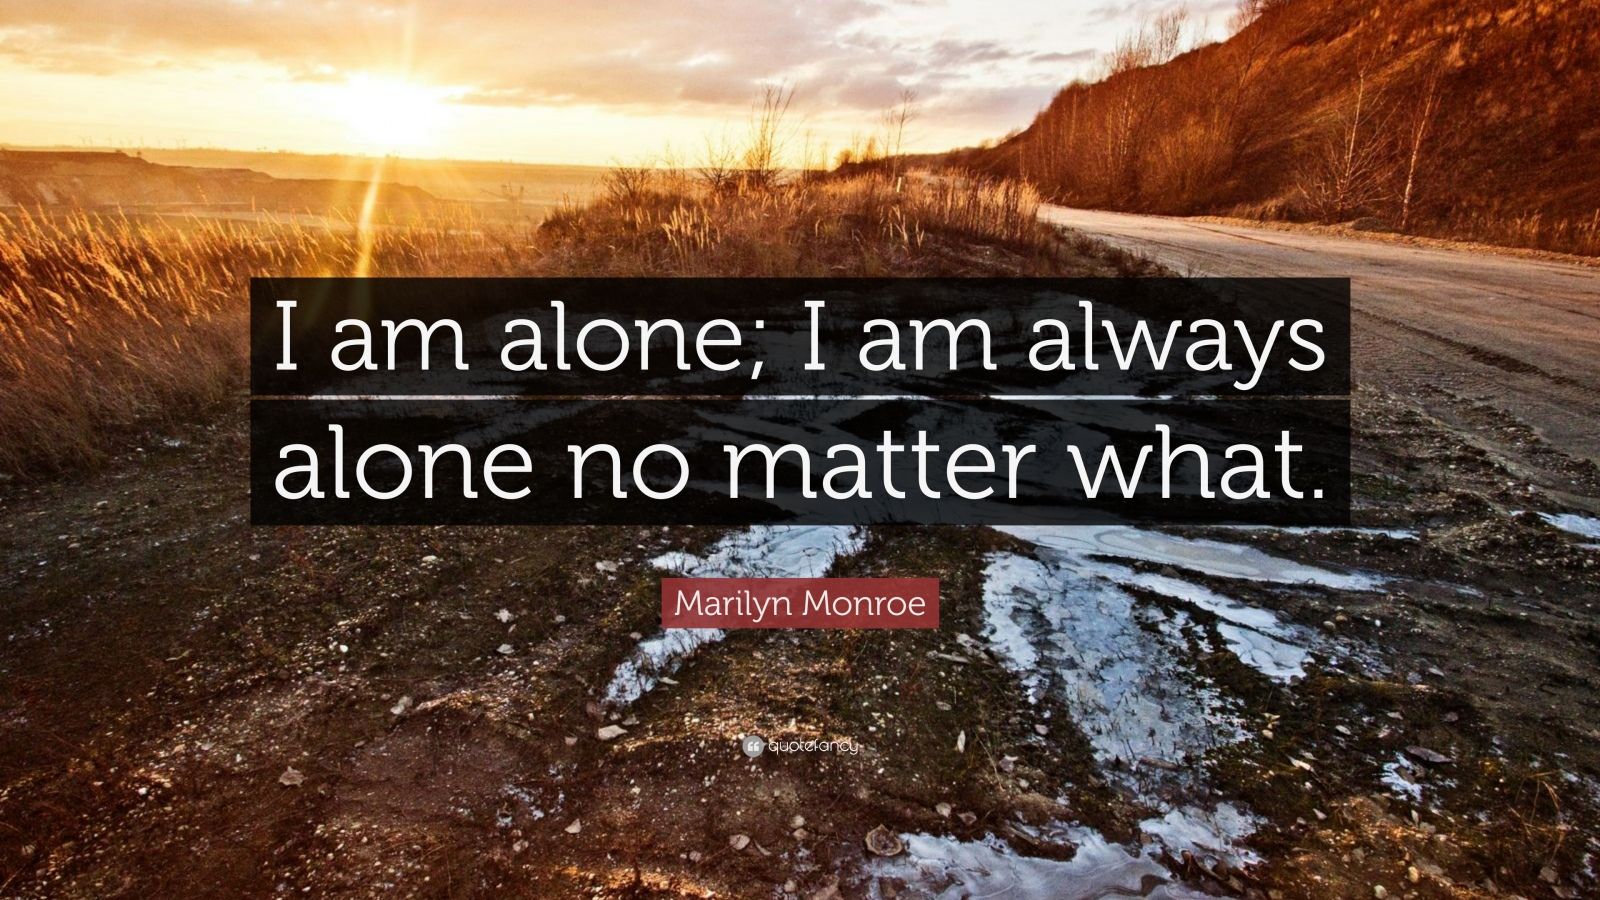 Marilyn Monroe Quote: "I am alone; I am always alone no ...